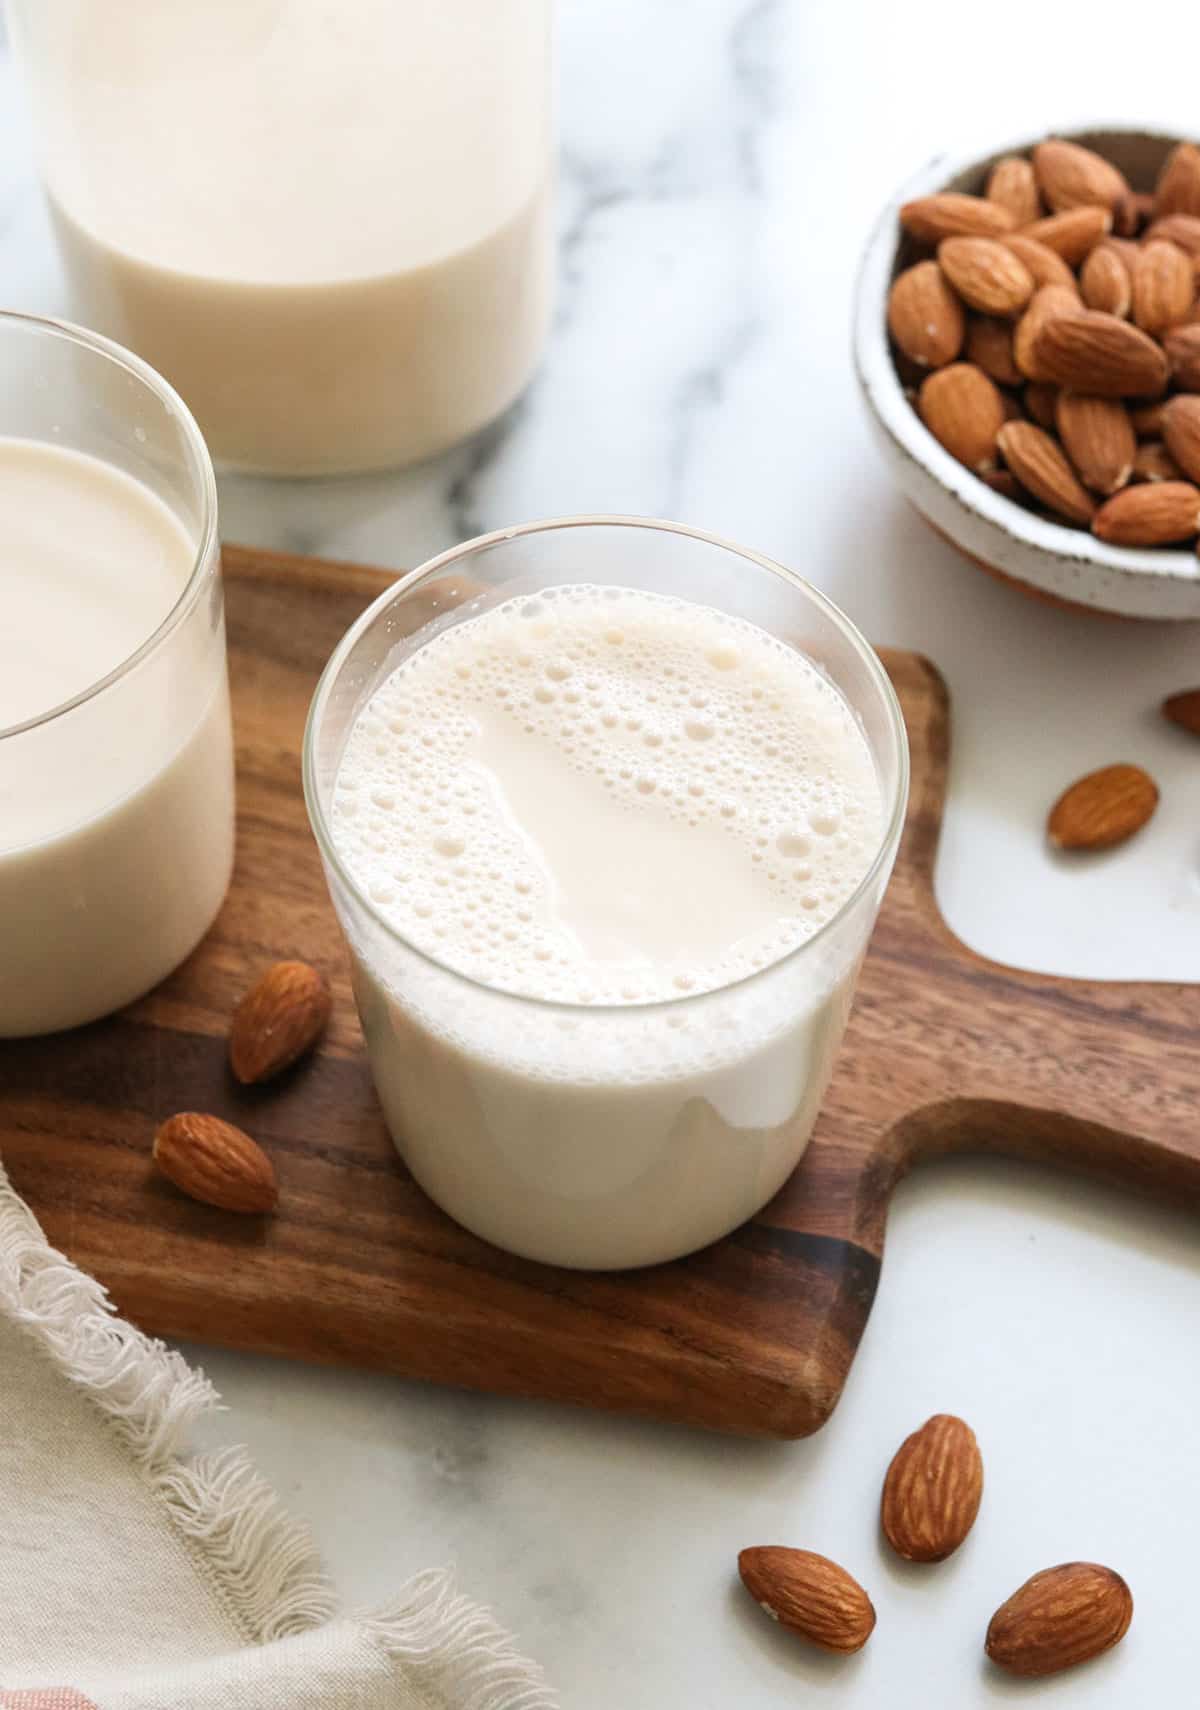 https://detoxinista.com/wp-content/uploads/2018/07/almond-milk-recipe.jpg